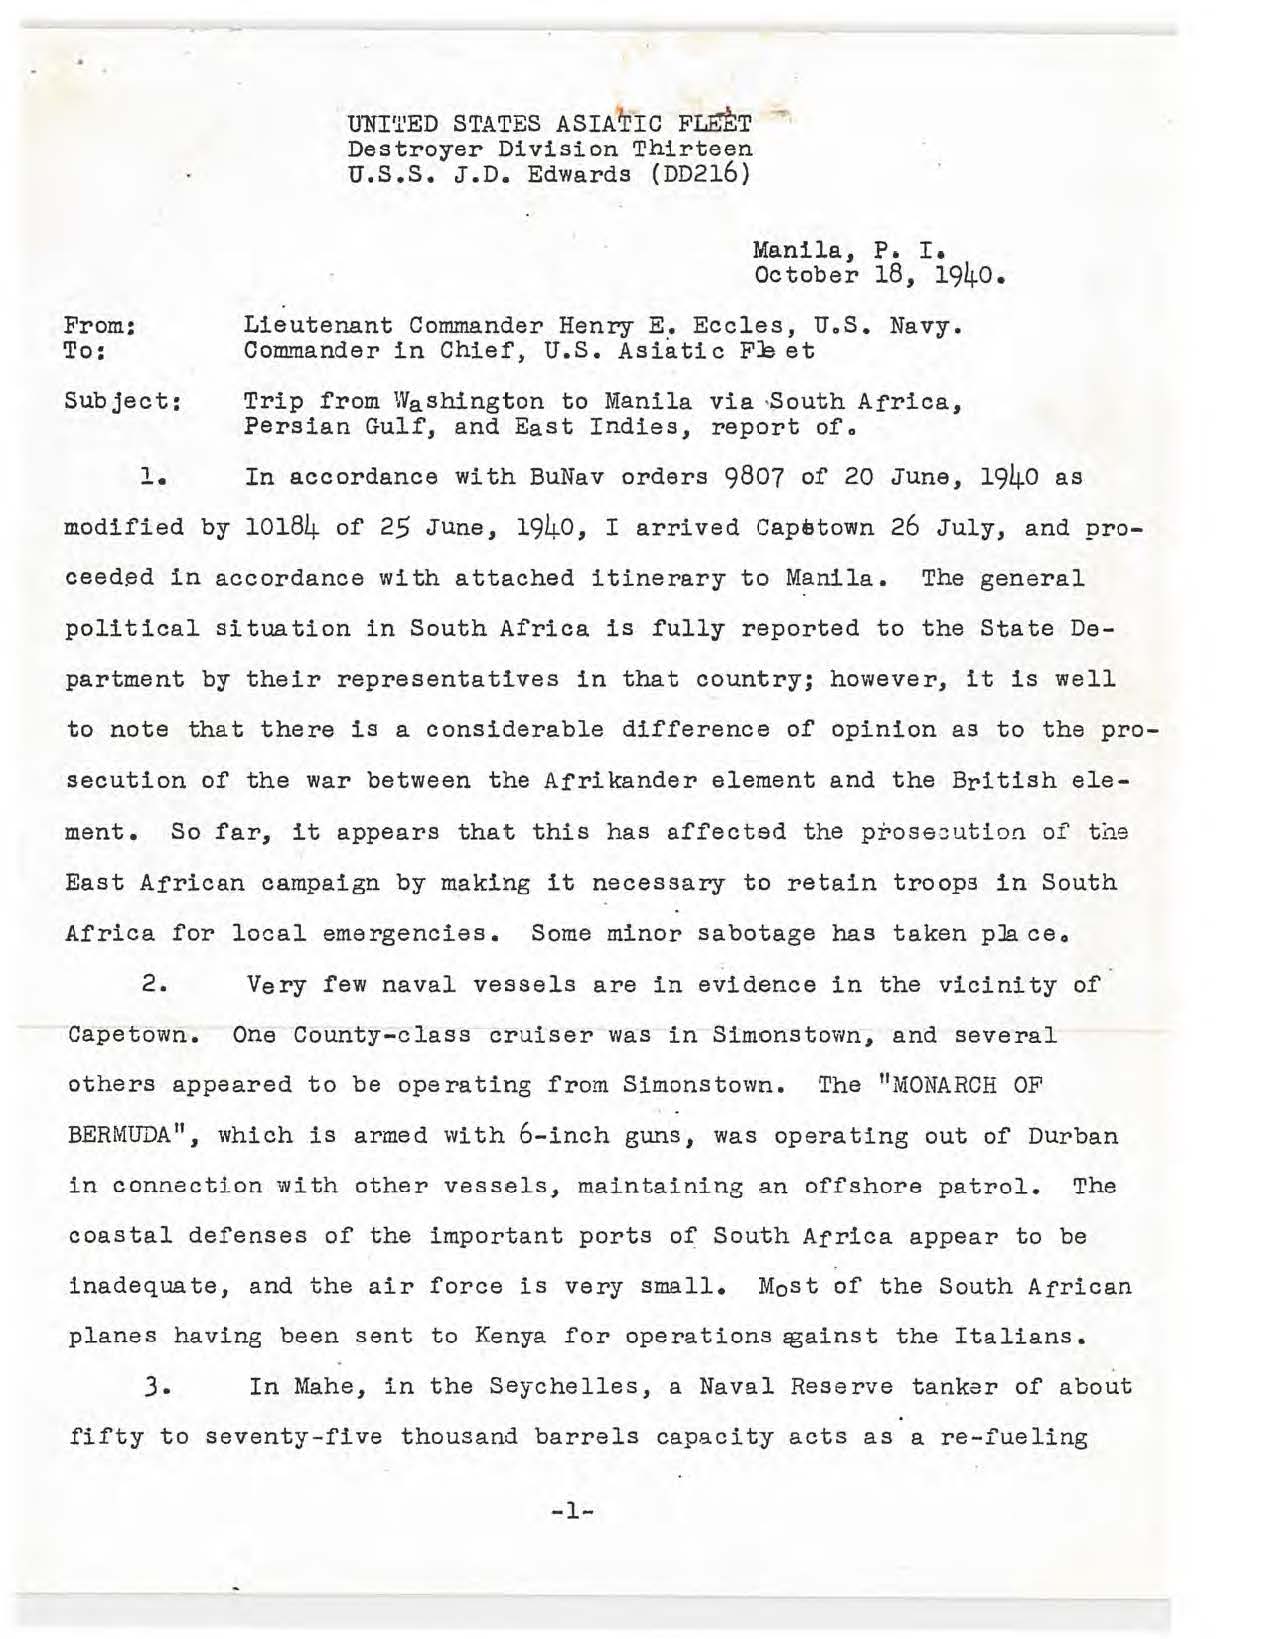 Memorandum from Henry E. Eccles to Commander in Chief, U.S. Asiatic Fleet